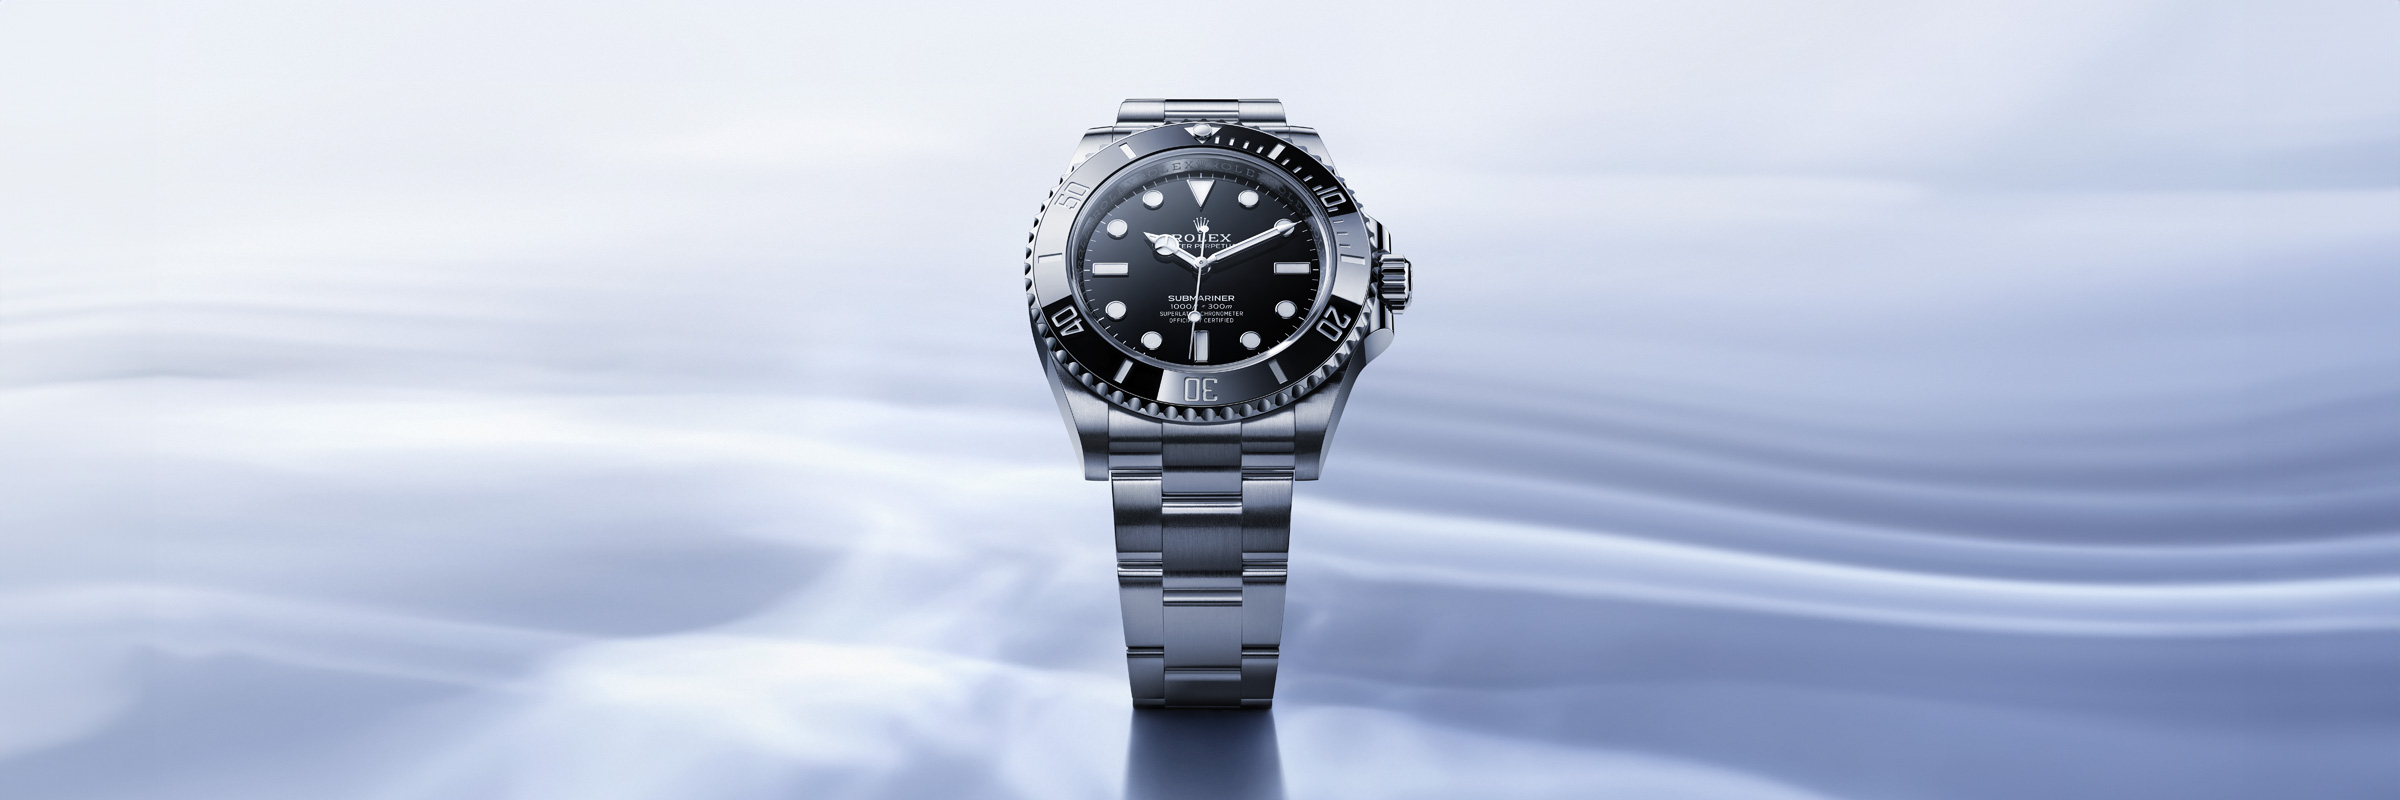 Submariner watches